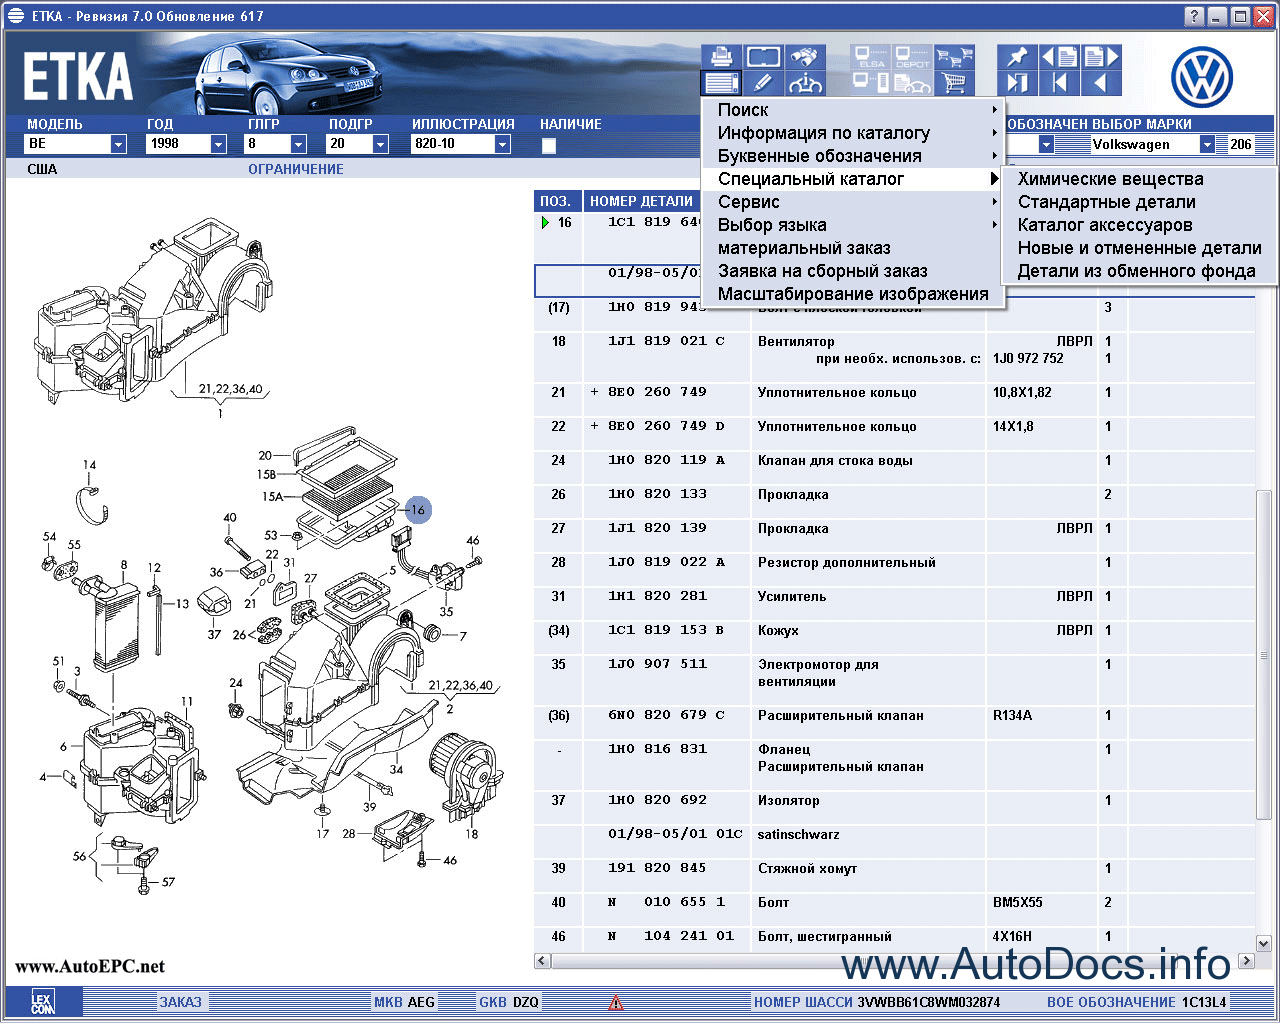 Audi VW Skoda Seat ETKA 7.2 spare parts catalogue contains ...